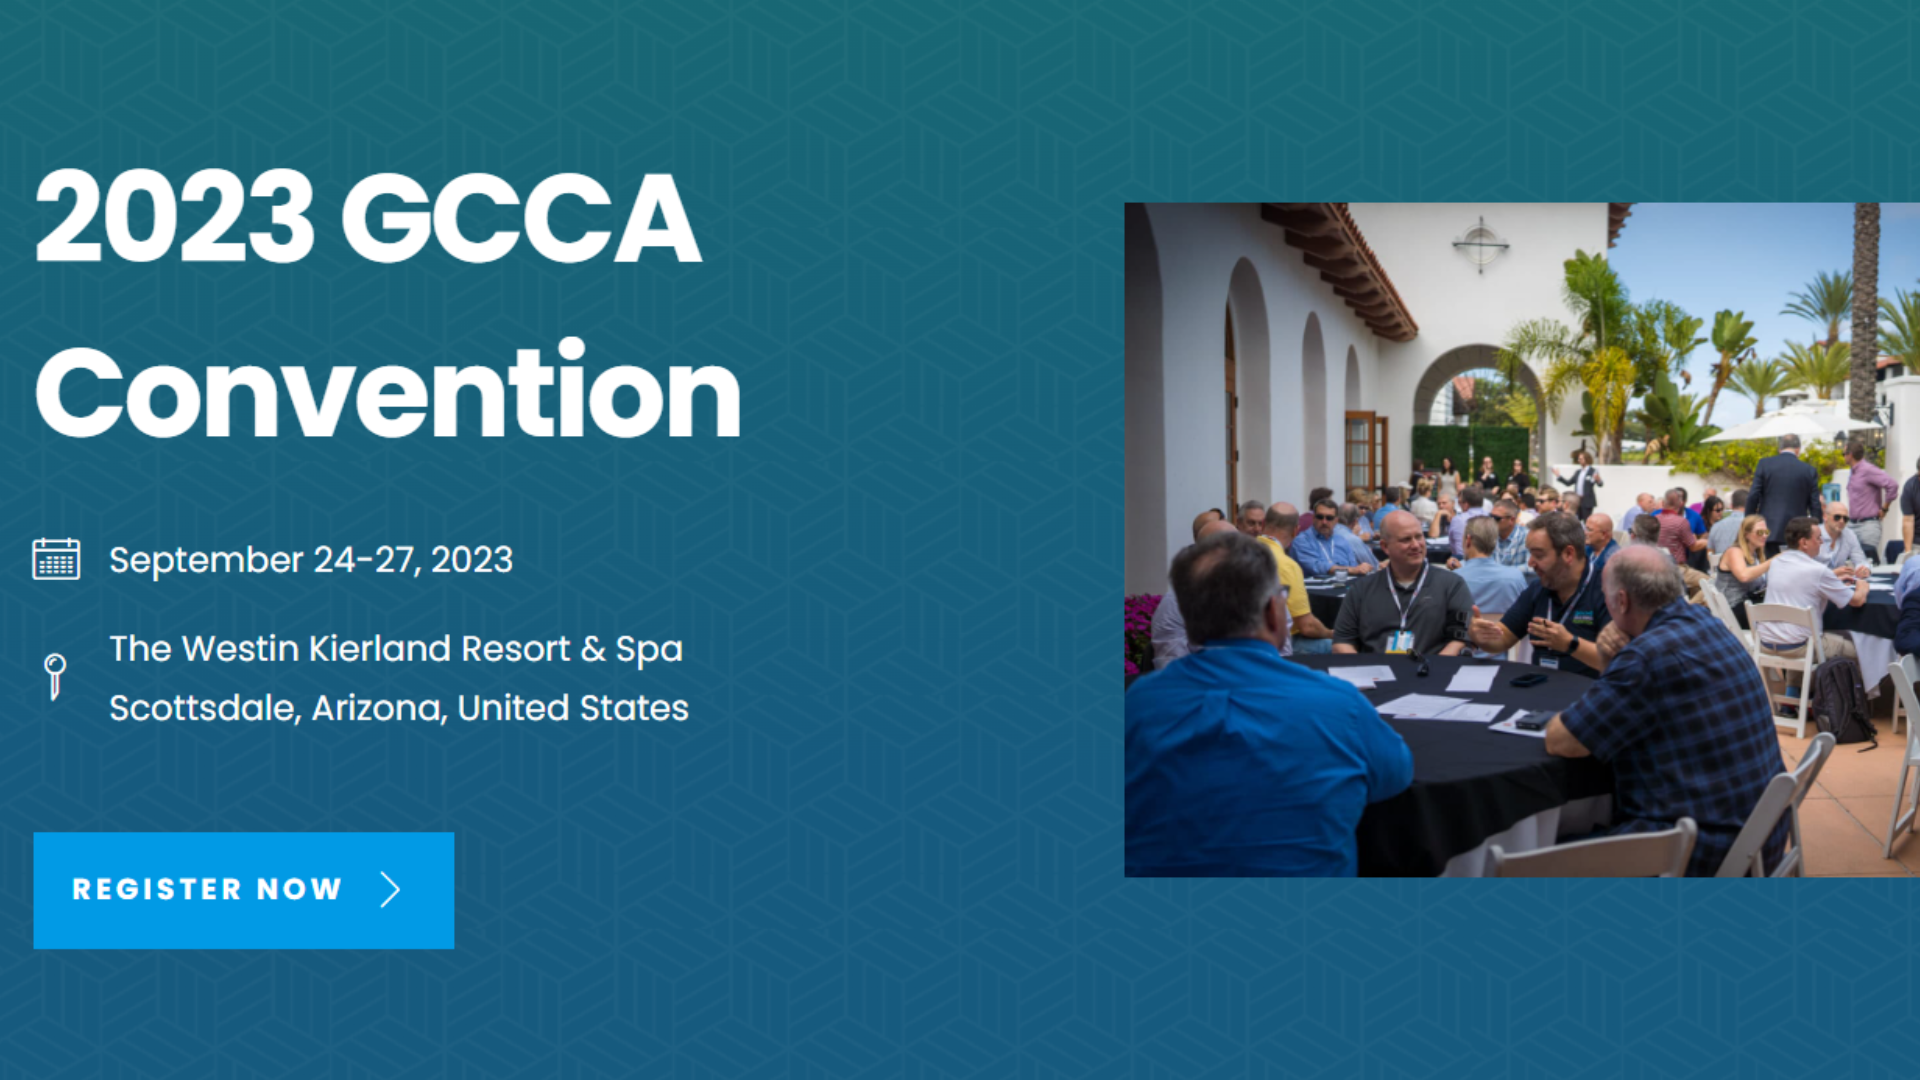 2023 GCCA Convention Scottsdale, Arizona September 2427, 2023